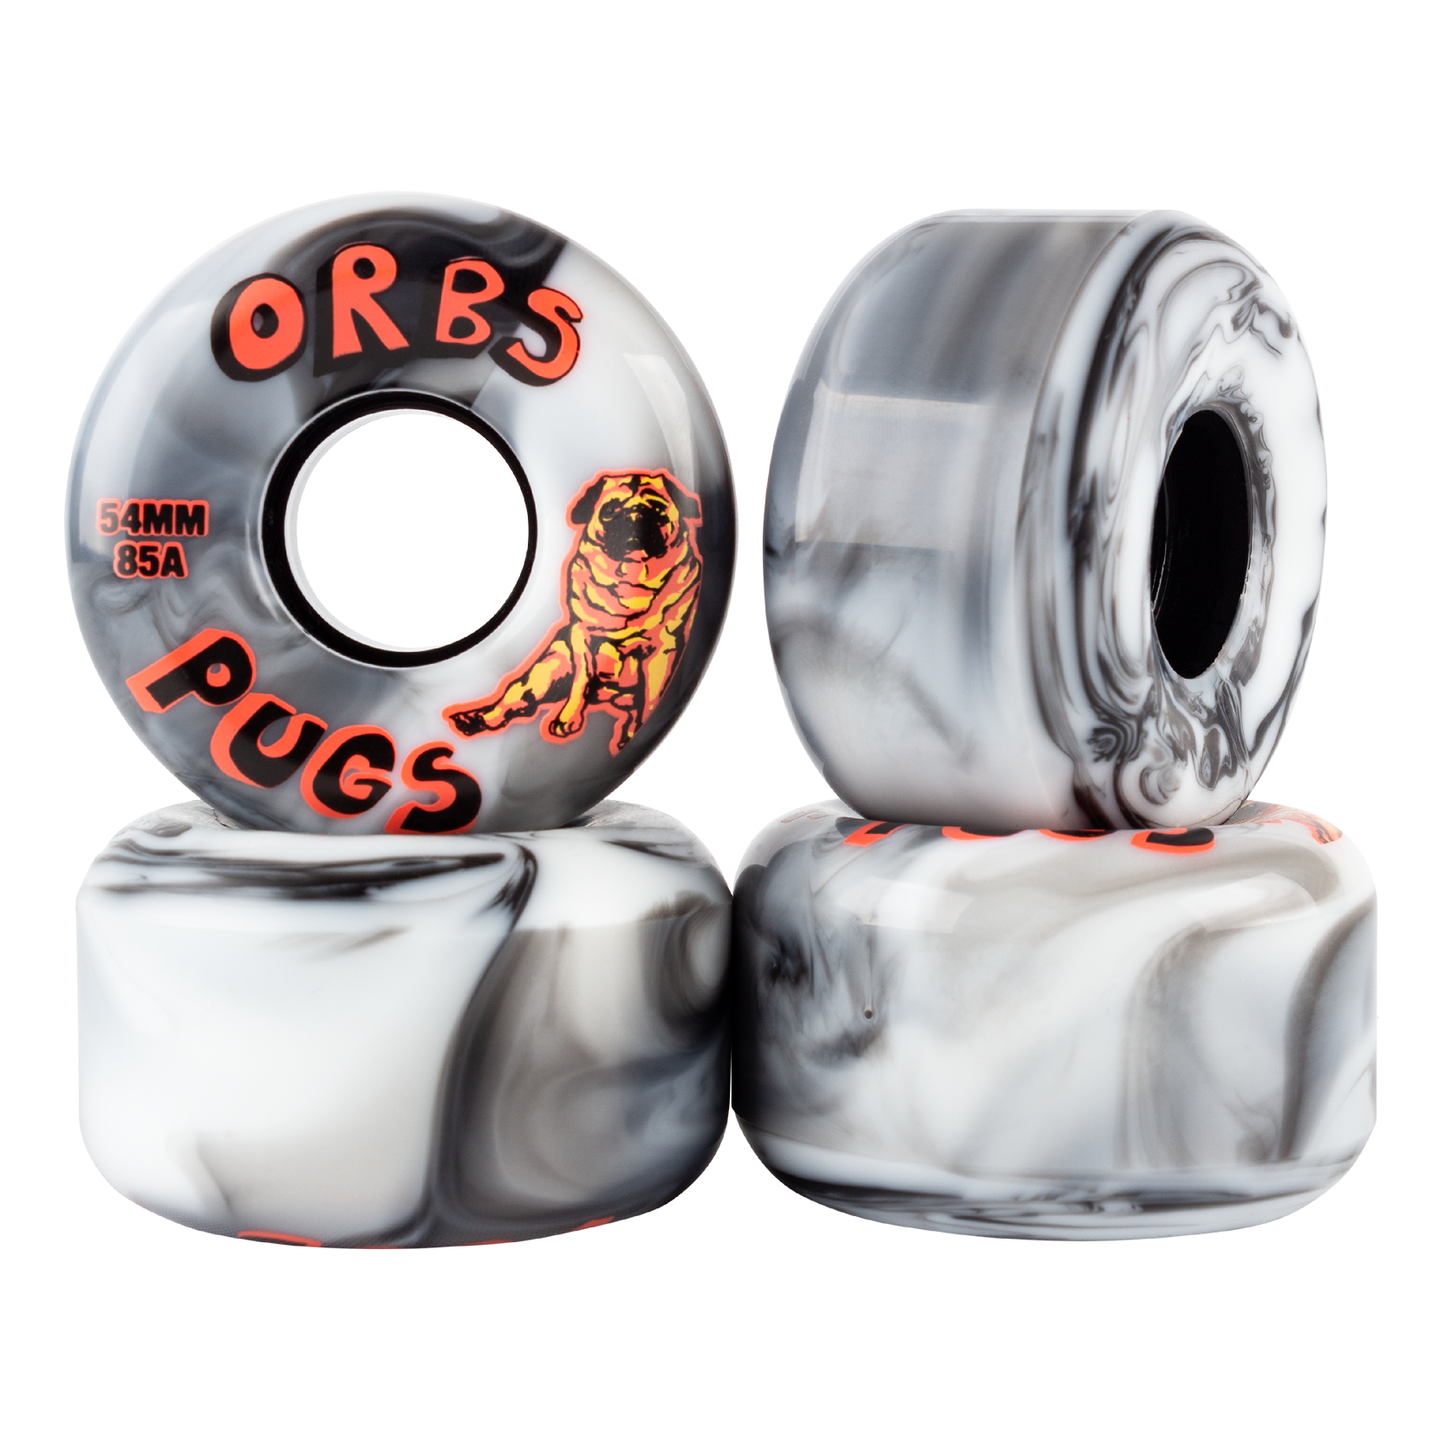 ORBS Pugs Swirl Wheels 54mm - สีดำ/ขาว